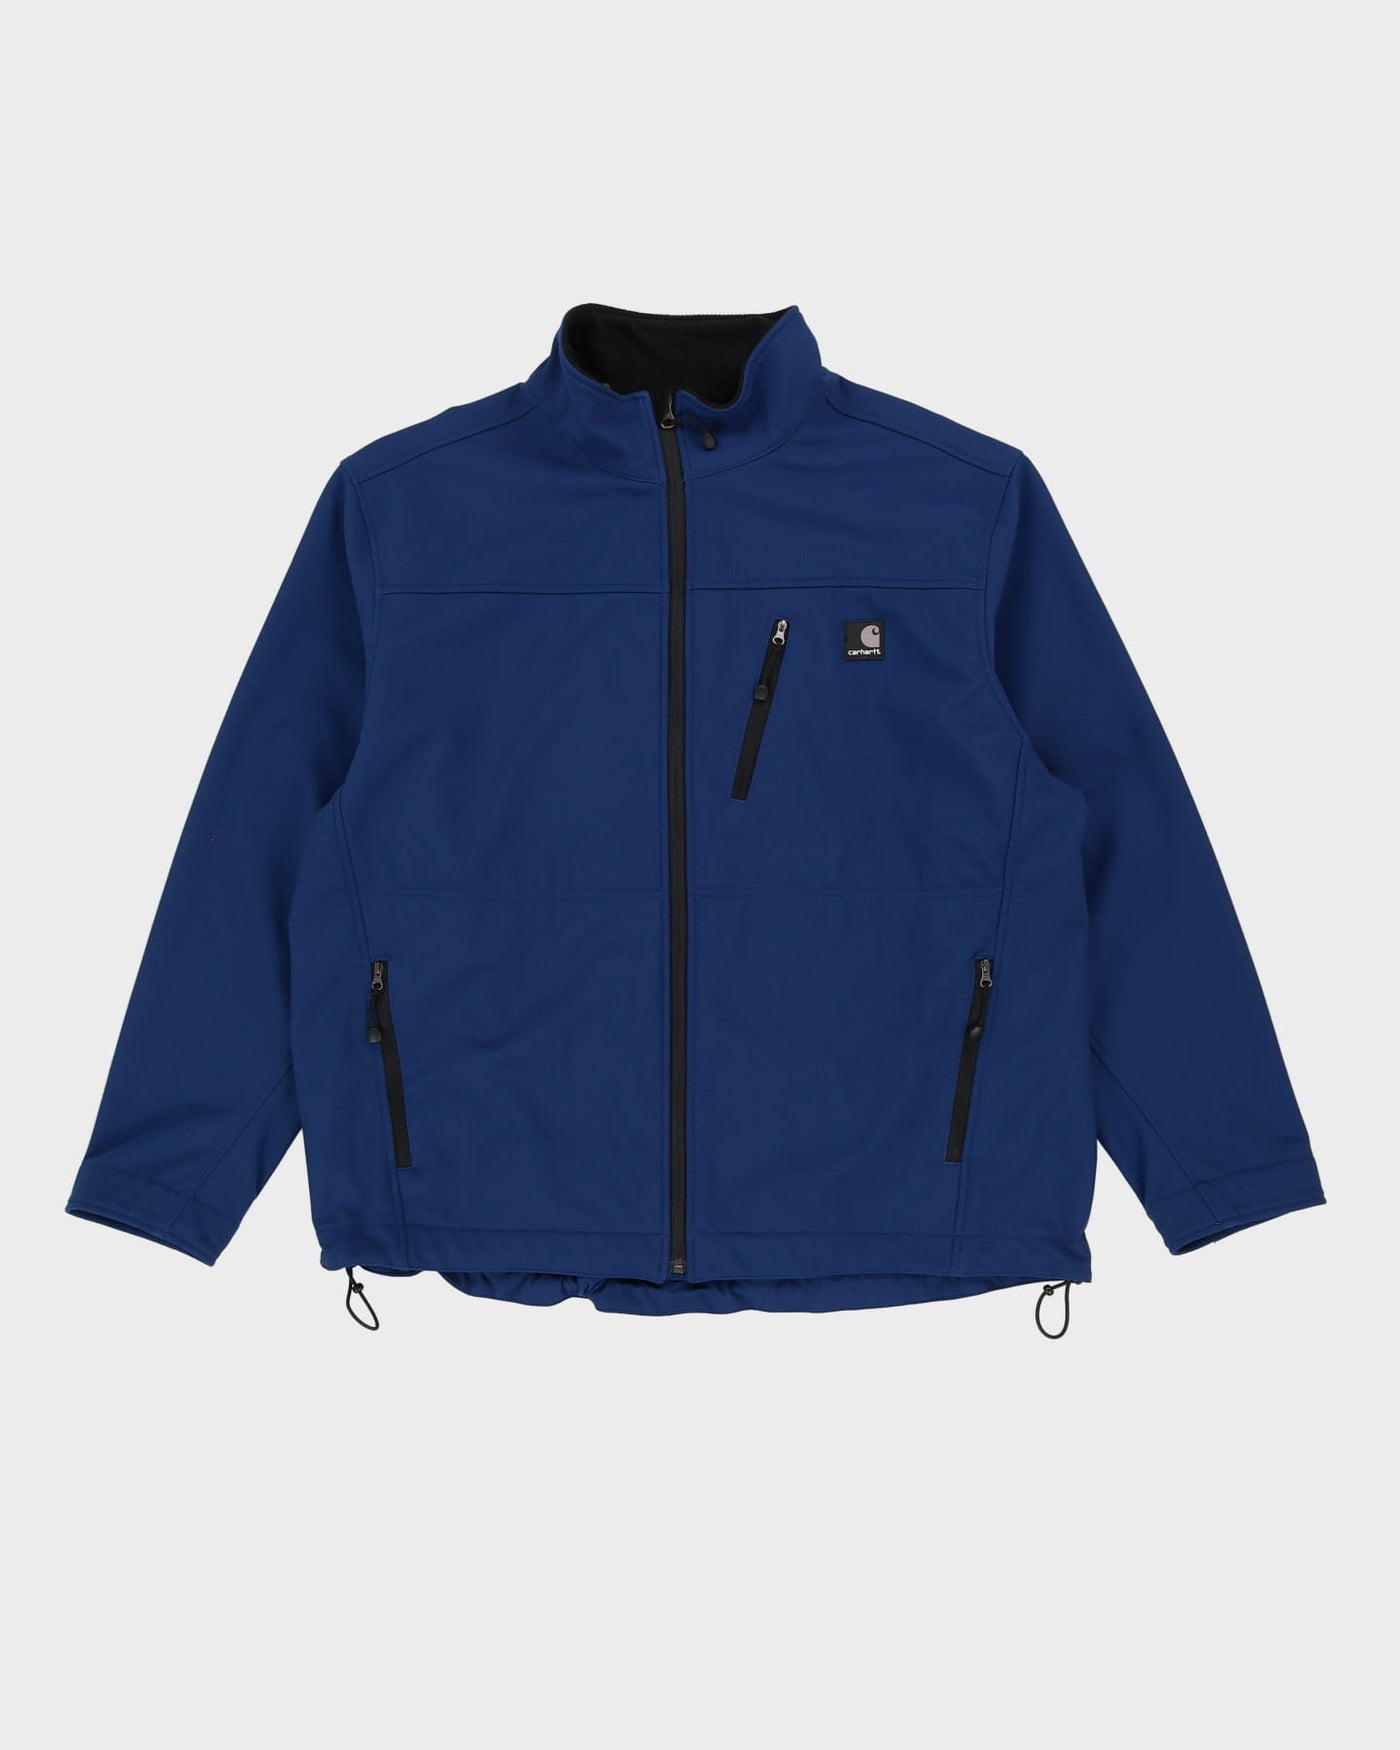 Carhartt Blue Full-Zip Windbreaker Jacket - XL